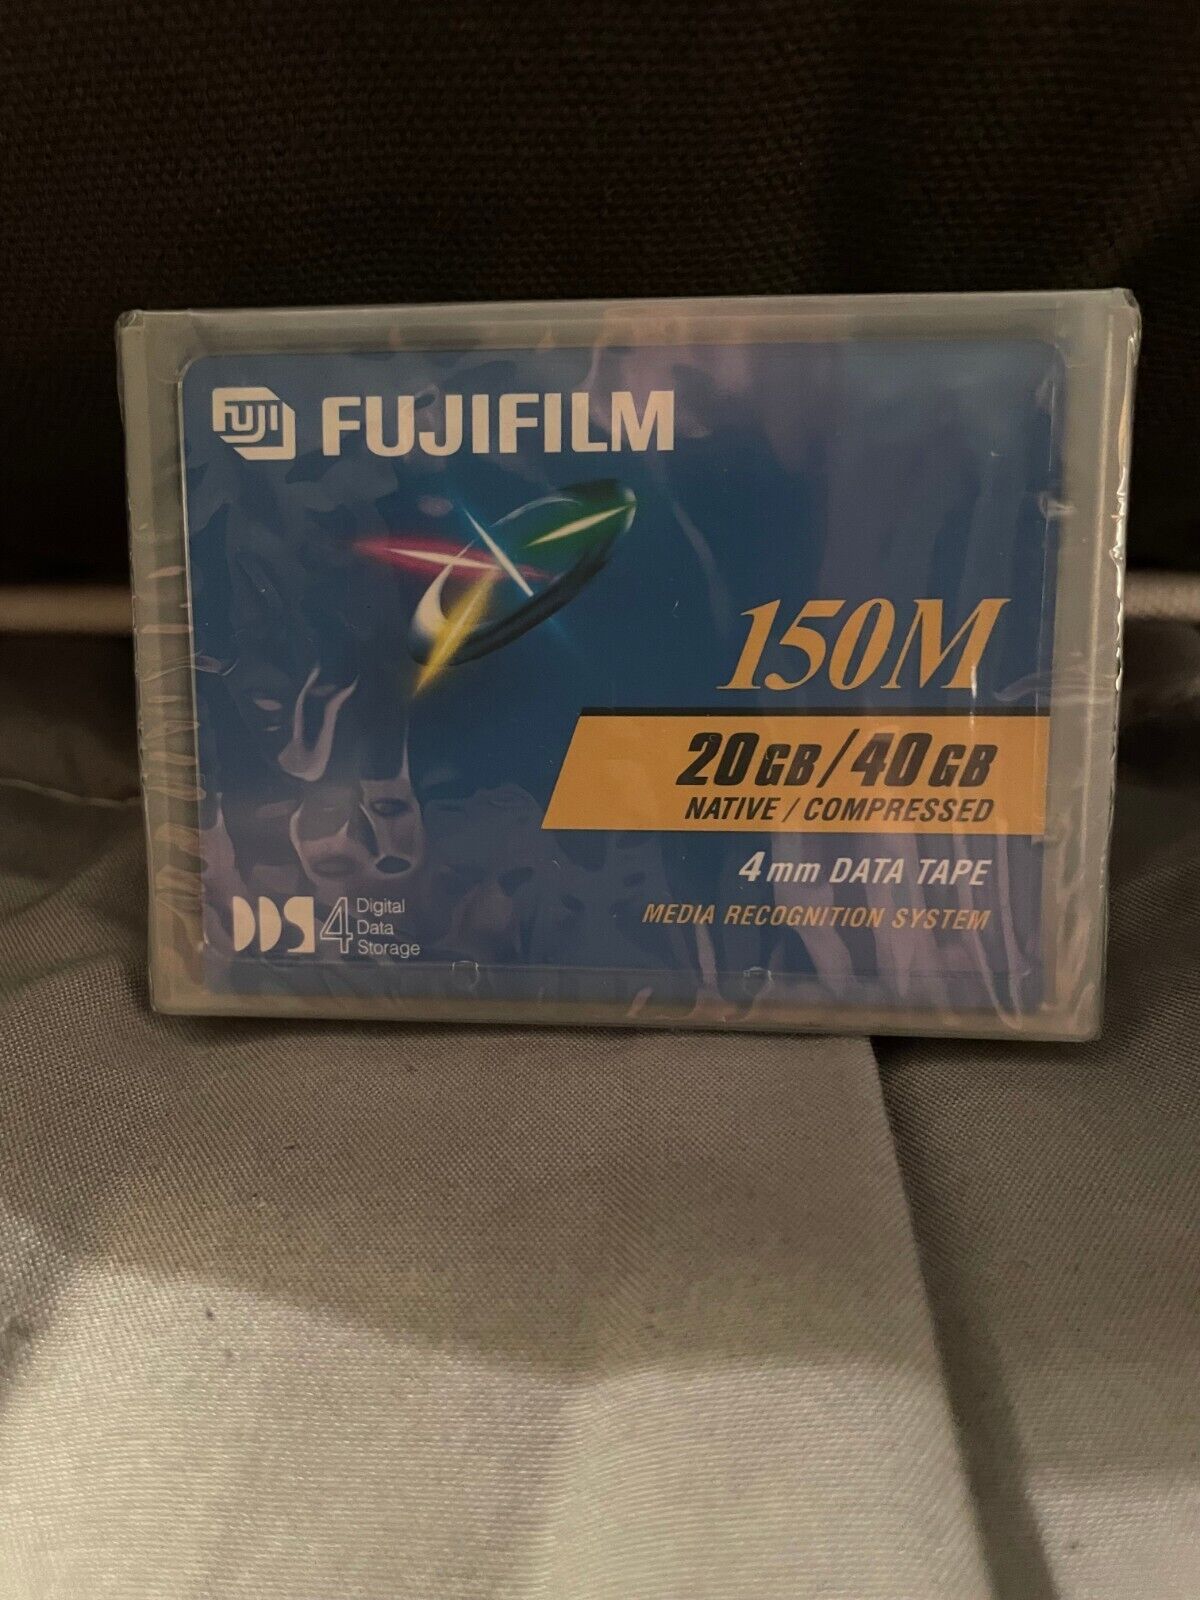 Factory Sealed Fujifilm 150M DAT DDS 4mm Data Tape 20GB/40GB Cartridge